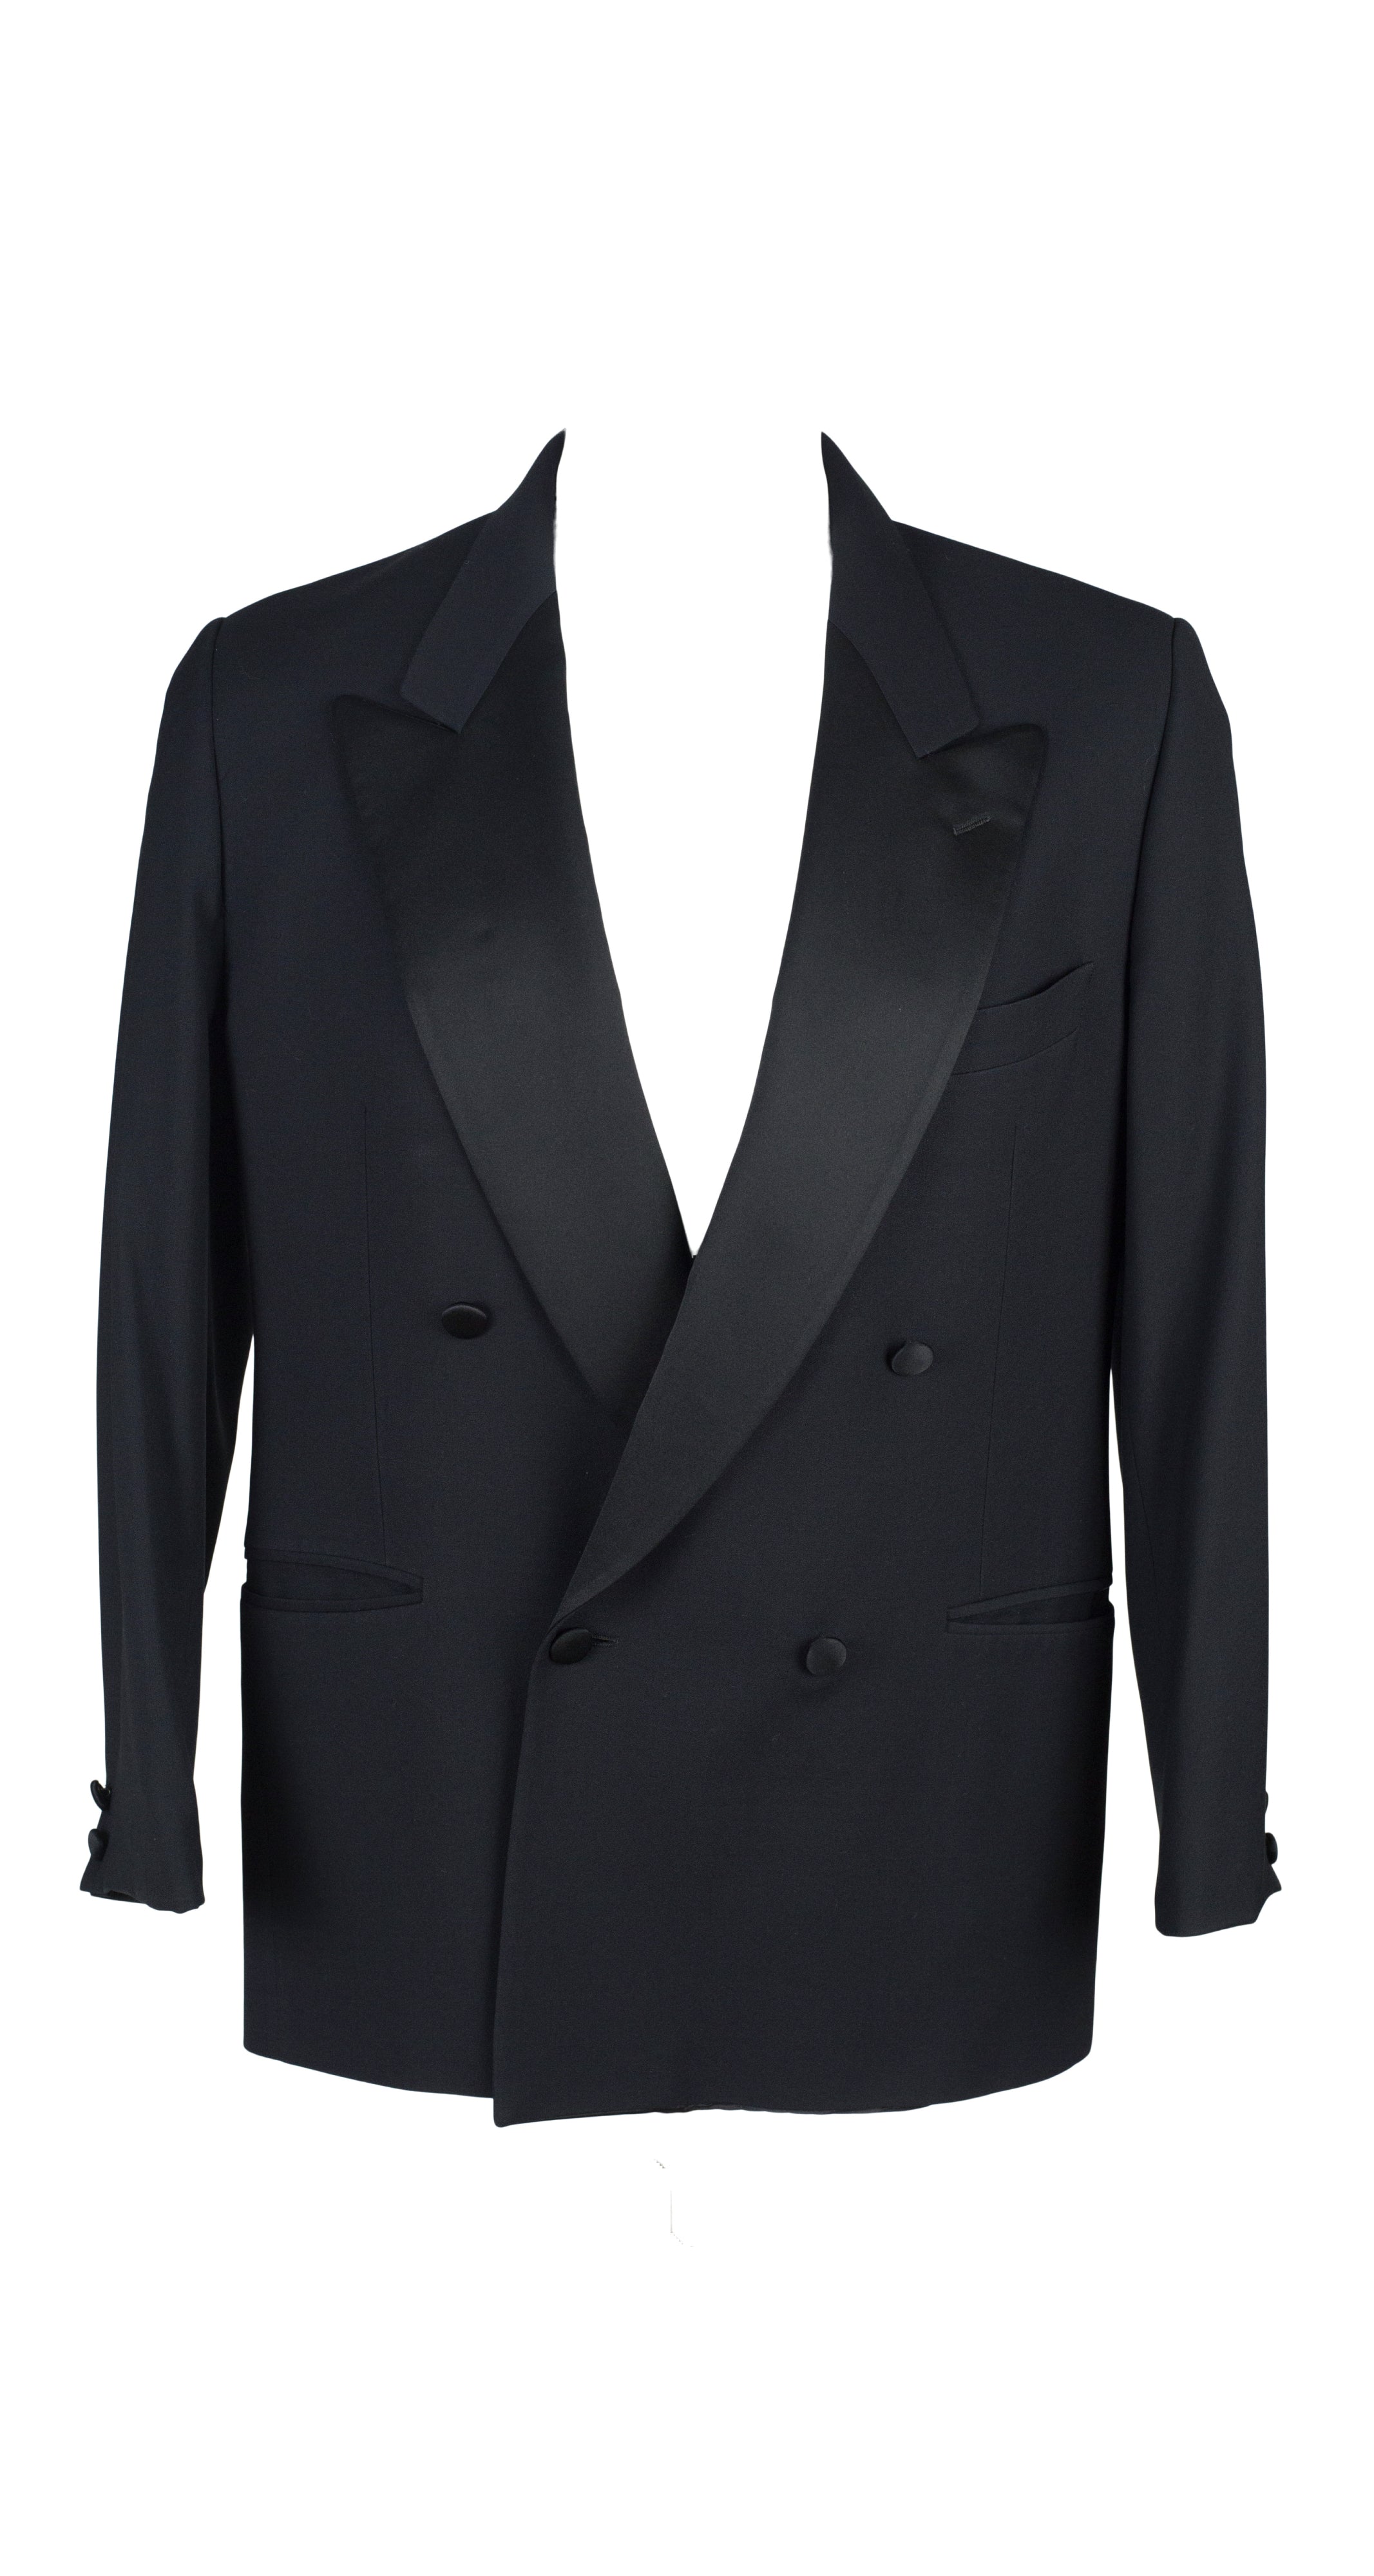 Gianfranco Ferré 1990s Men's Black Silk Satin & Wool Tuxedo Suit Jacket ...